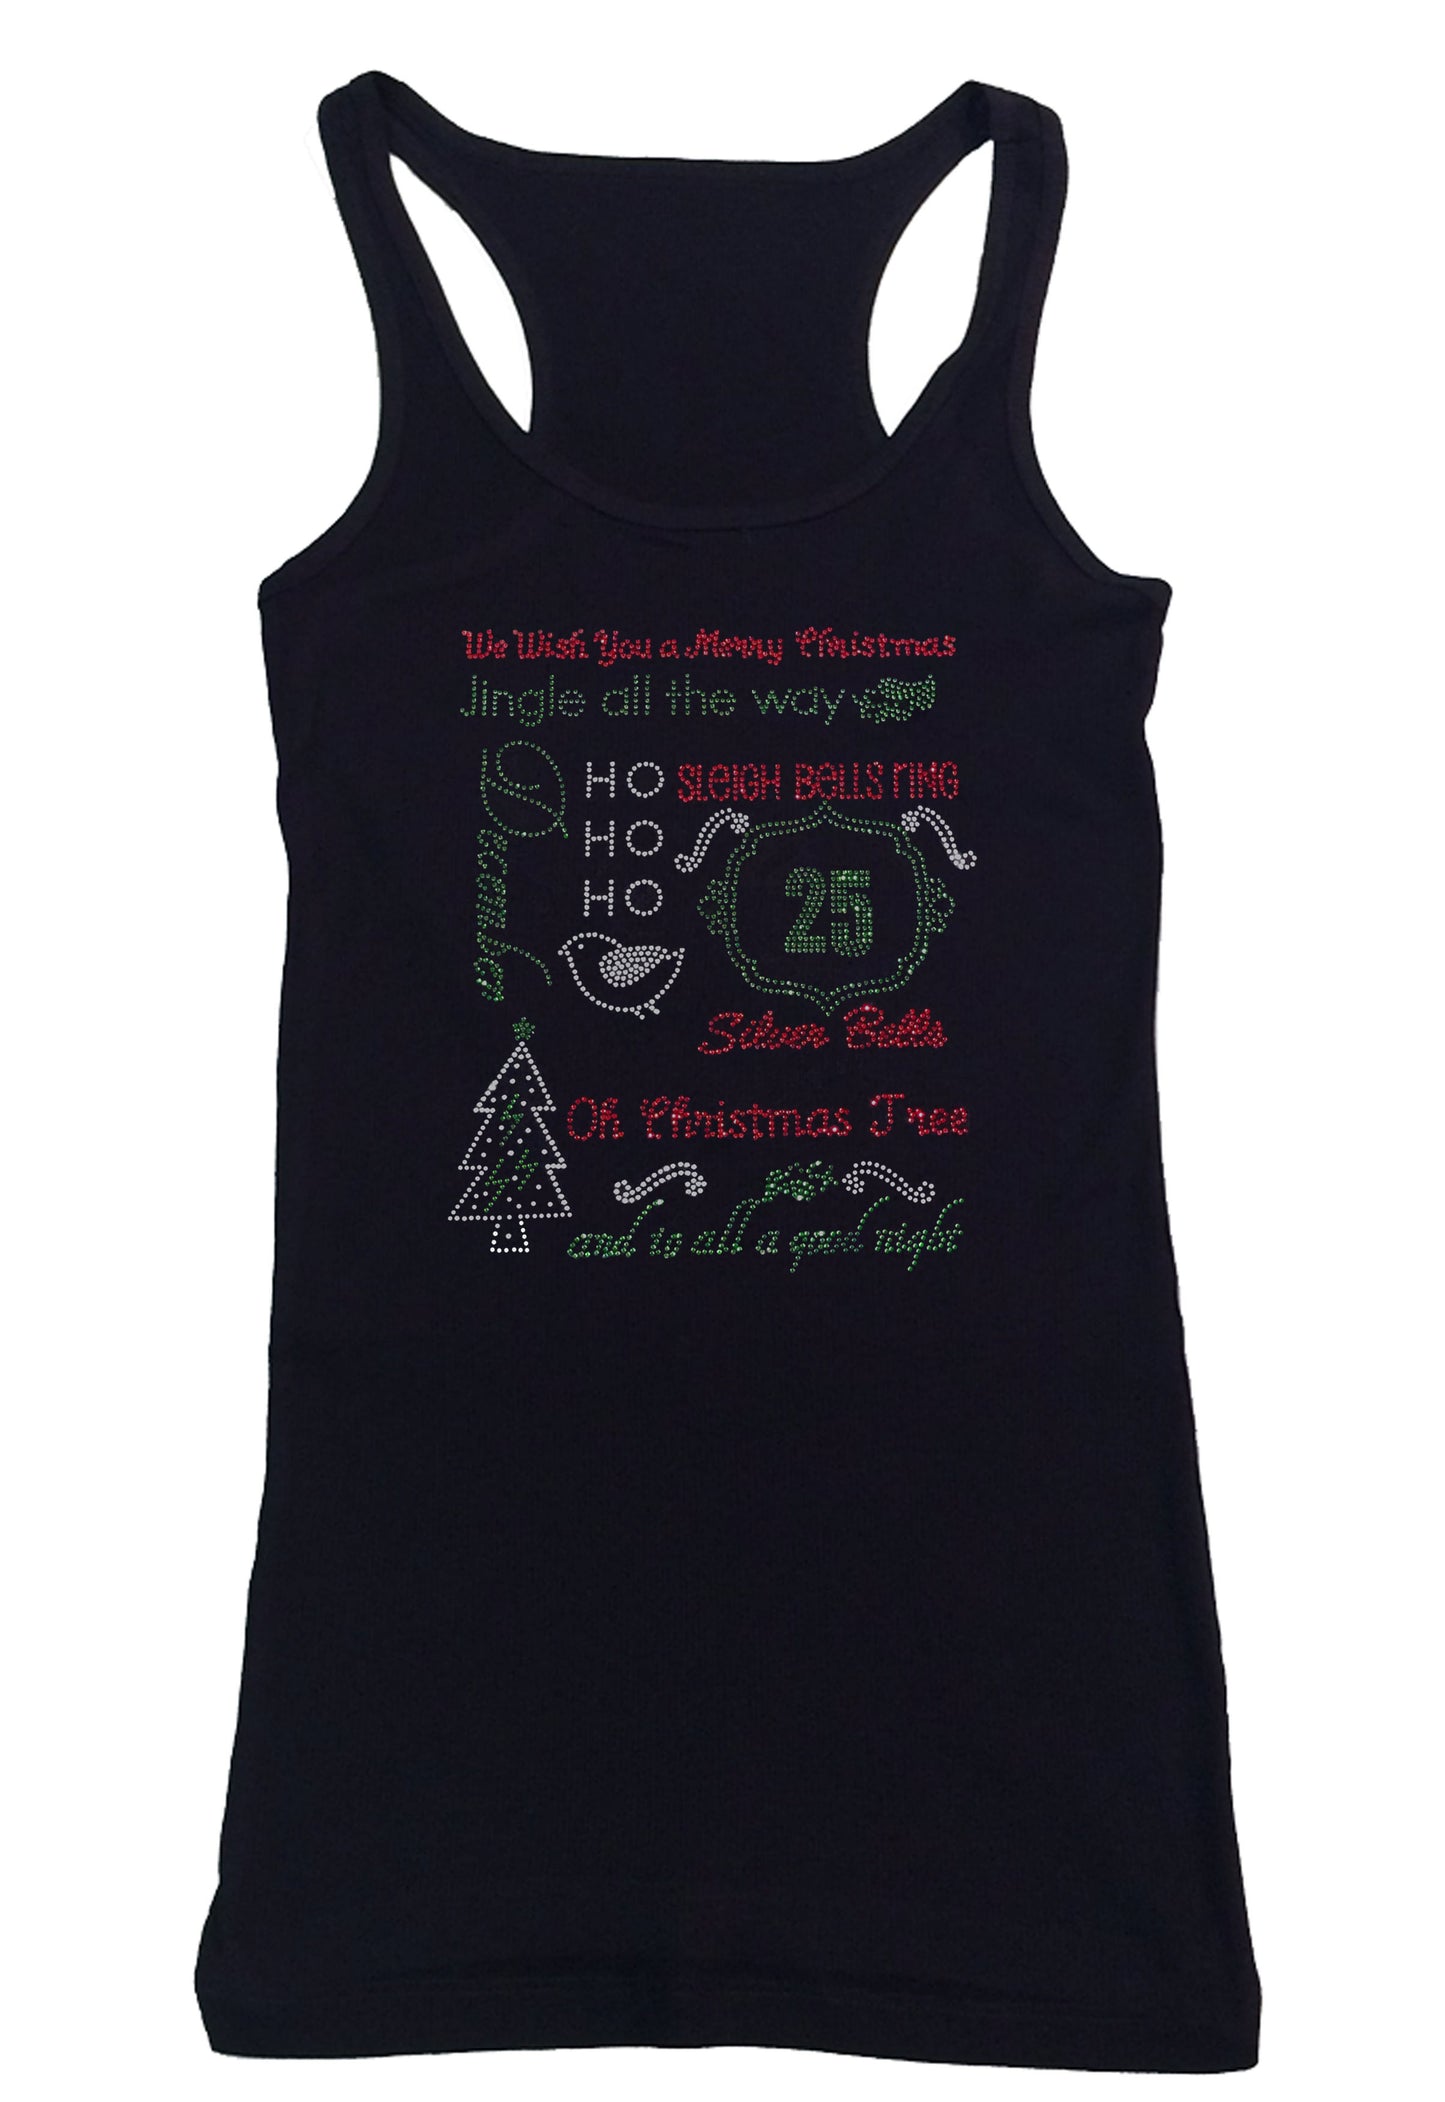 Womens T-shirt with Christmas Sayings in Rhinestones